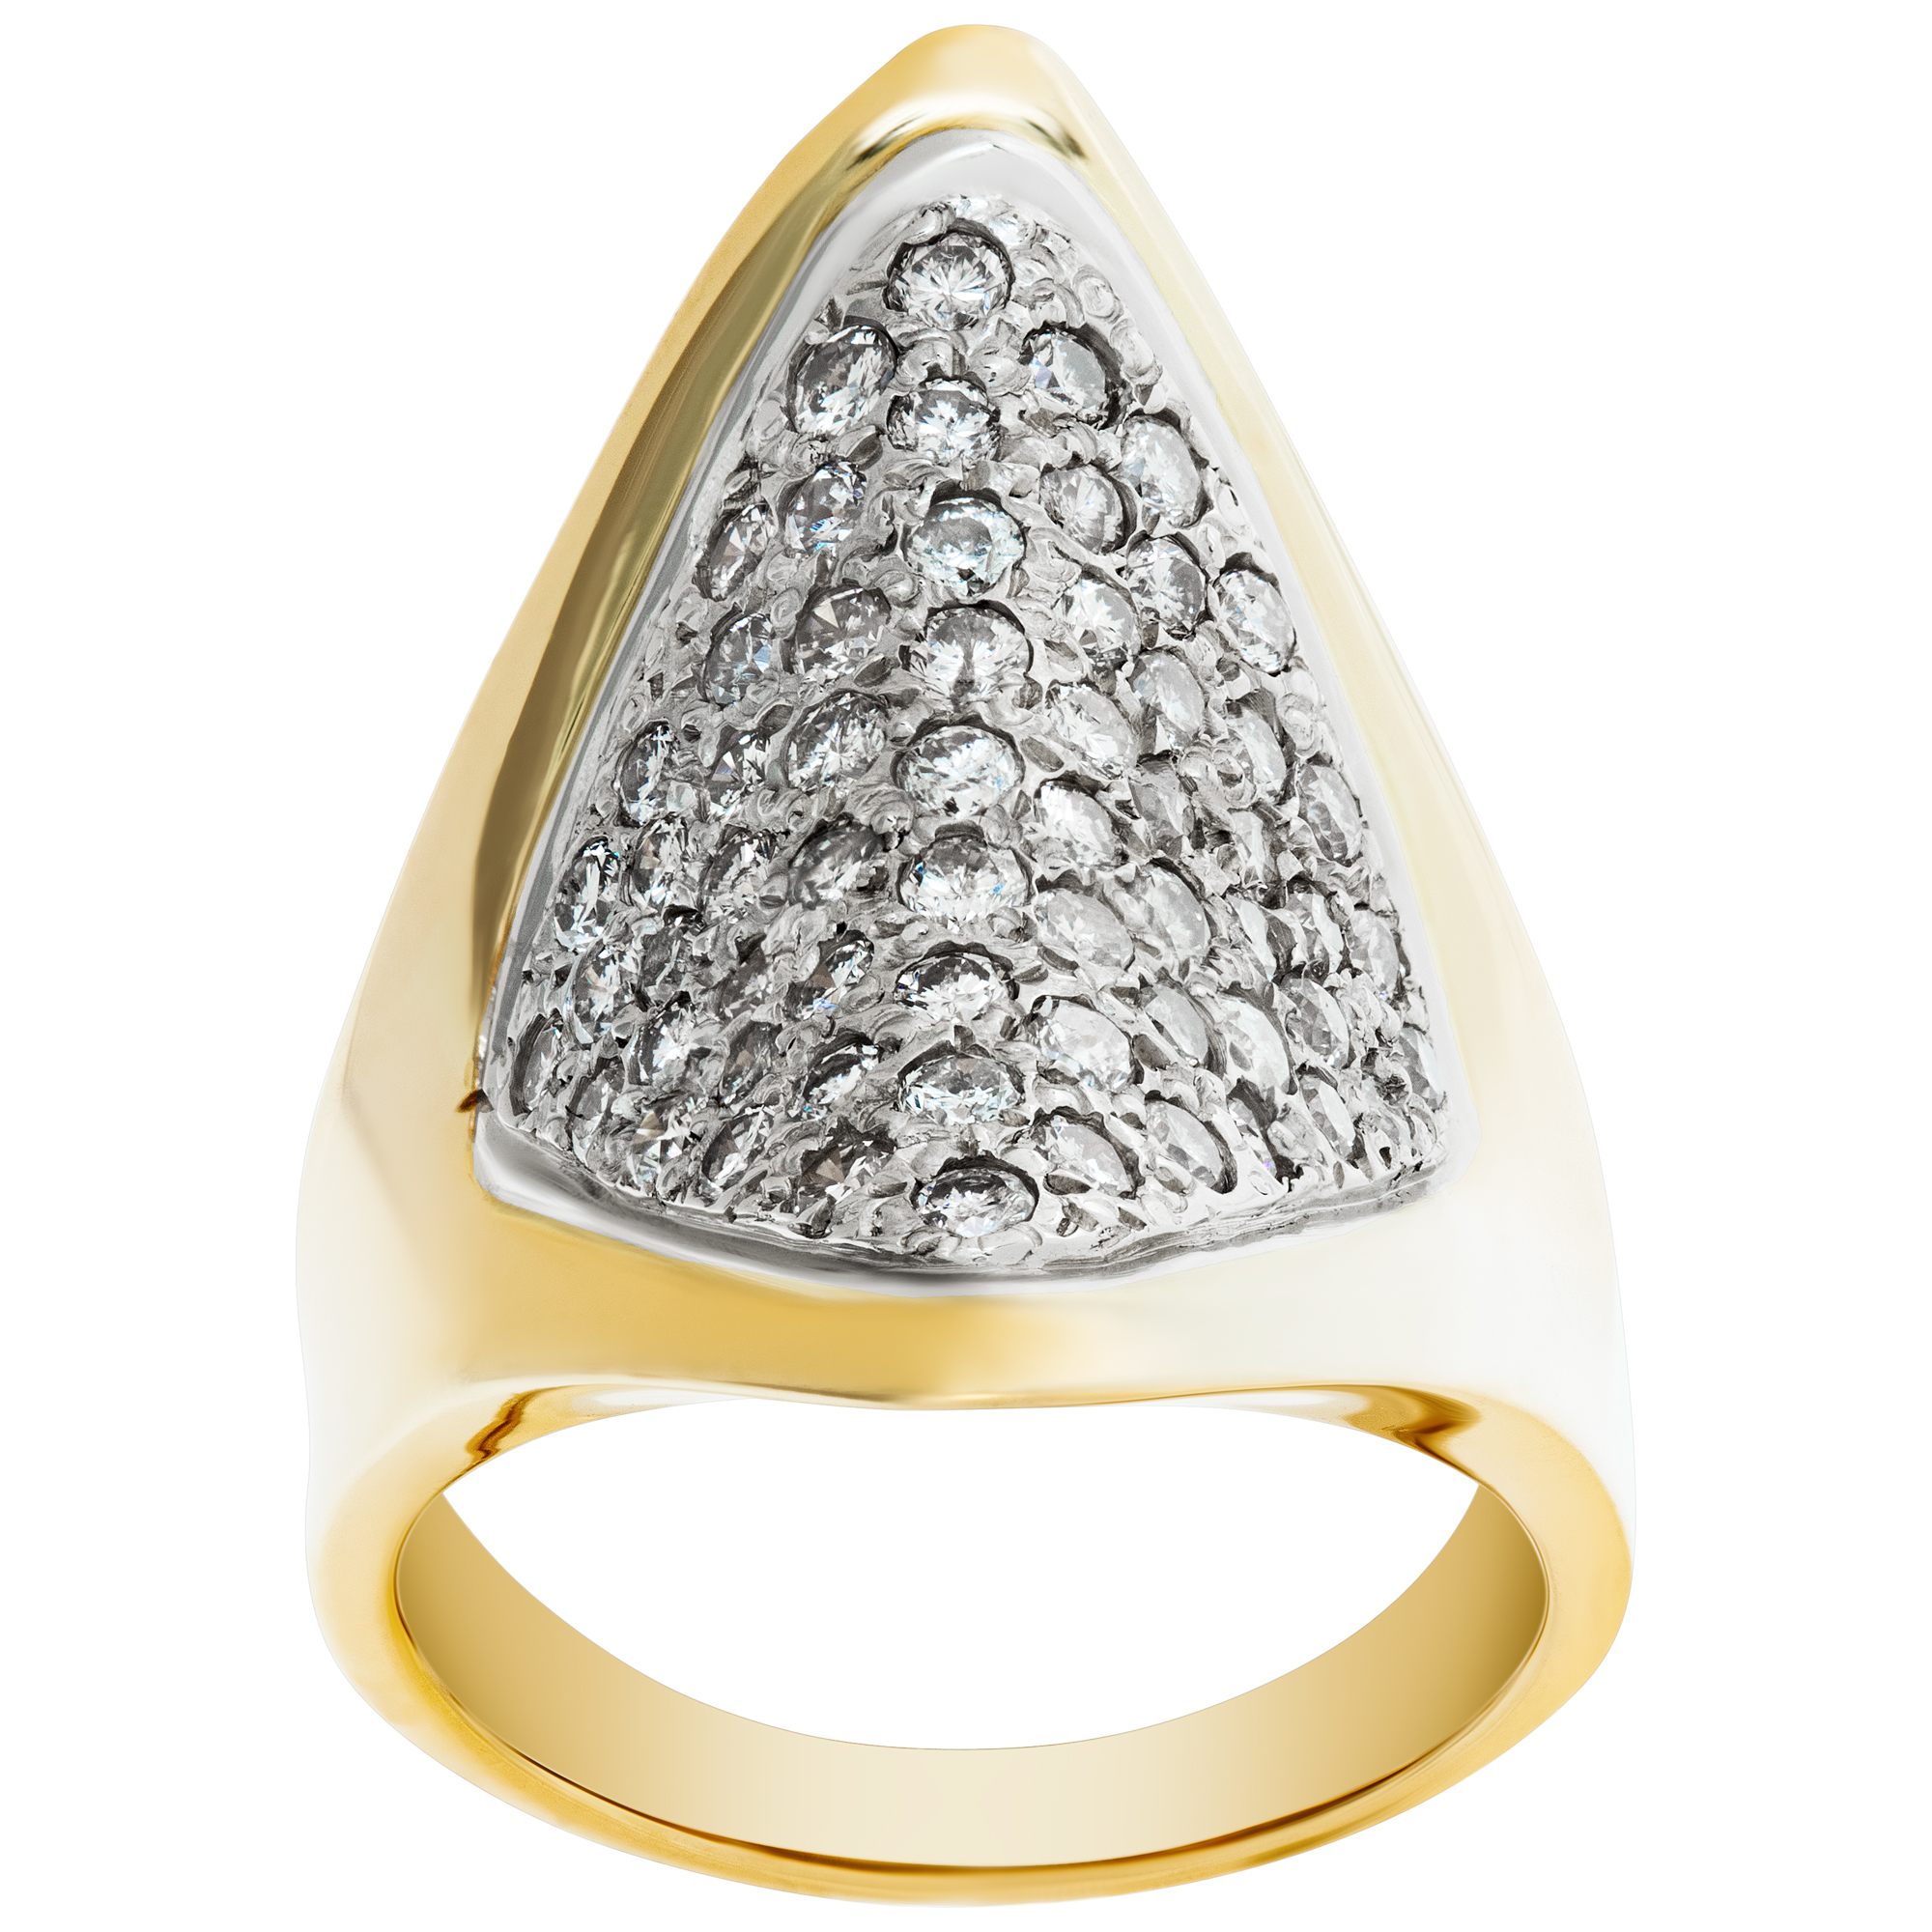 Modern diamonds ring in 18k. Round brilliant cut diamonds total approx.weight: 1.00 carat.